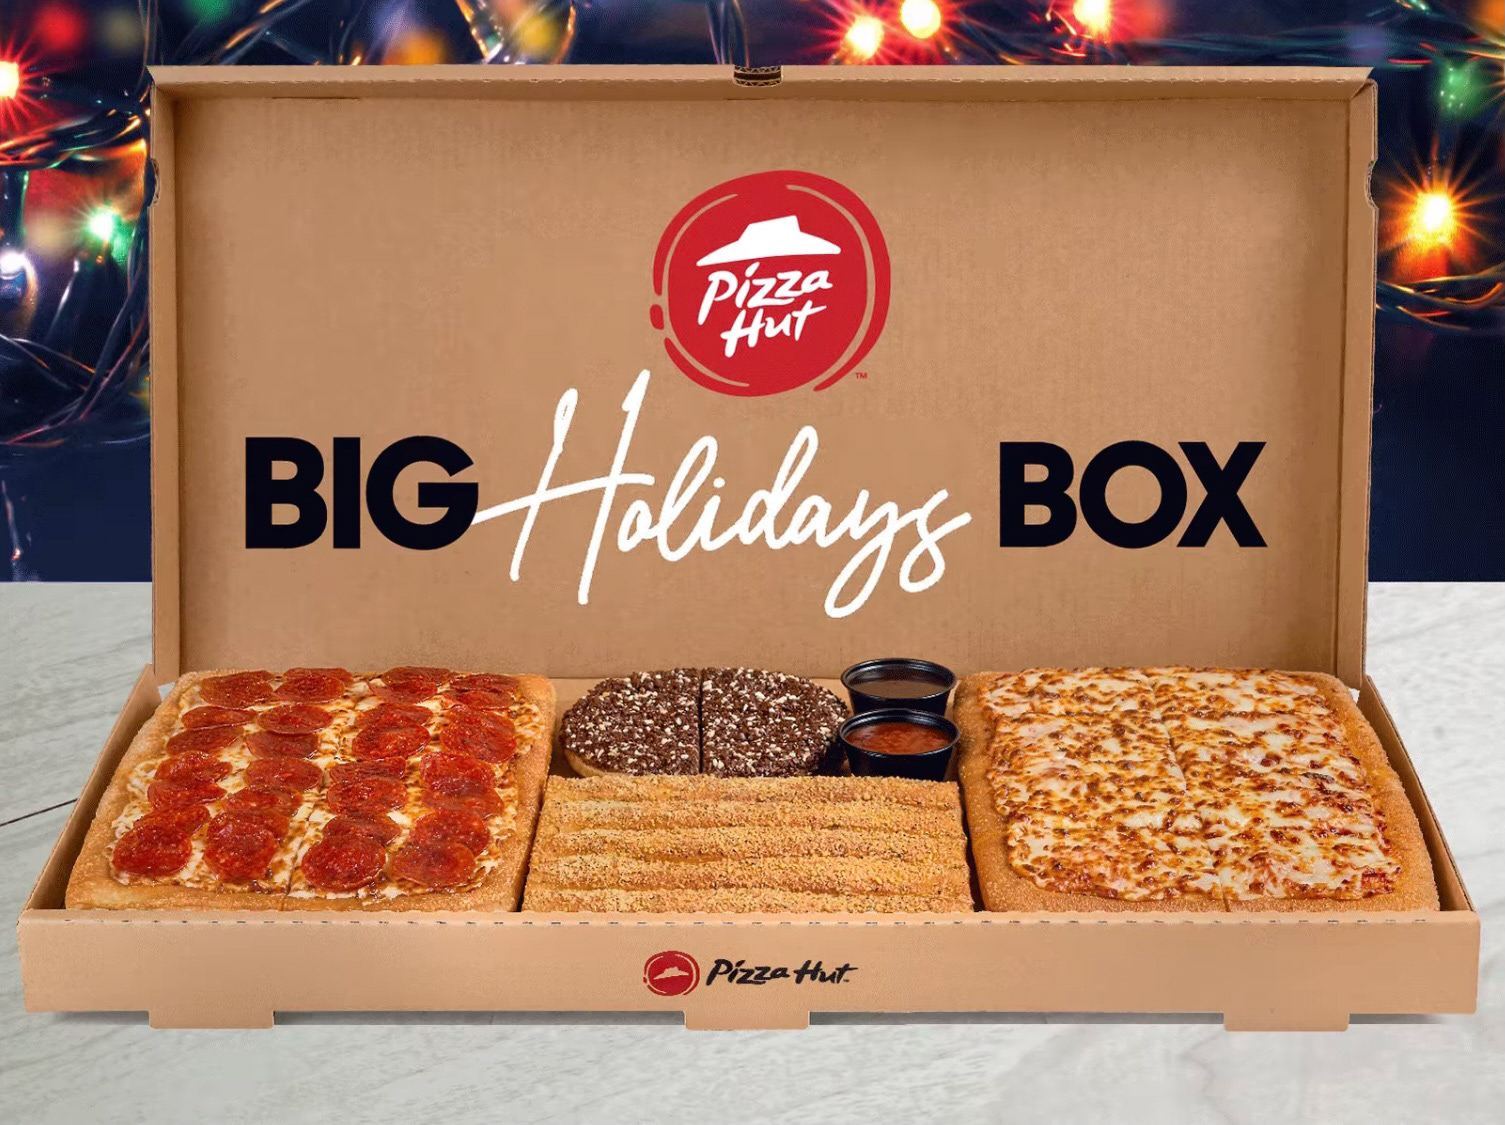 Pizza Hut - La respuesta es la Big Dinner Box 